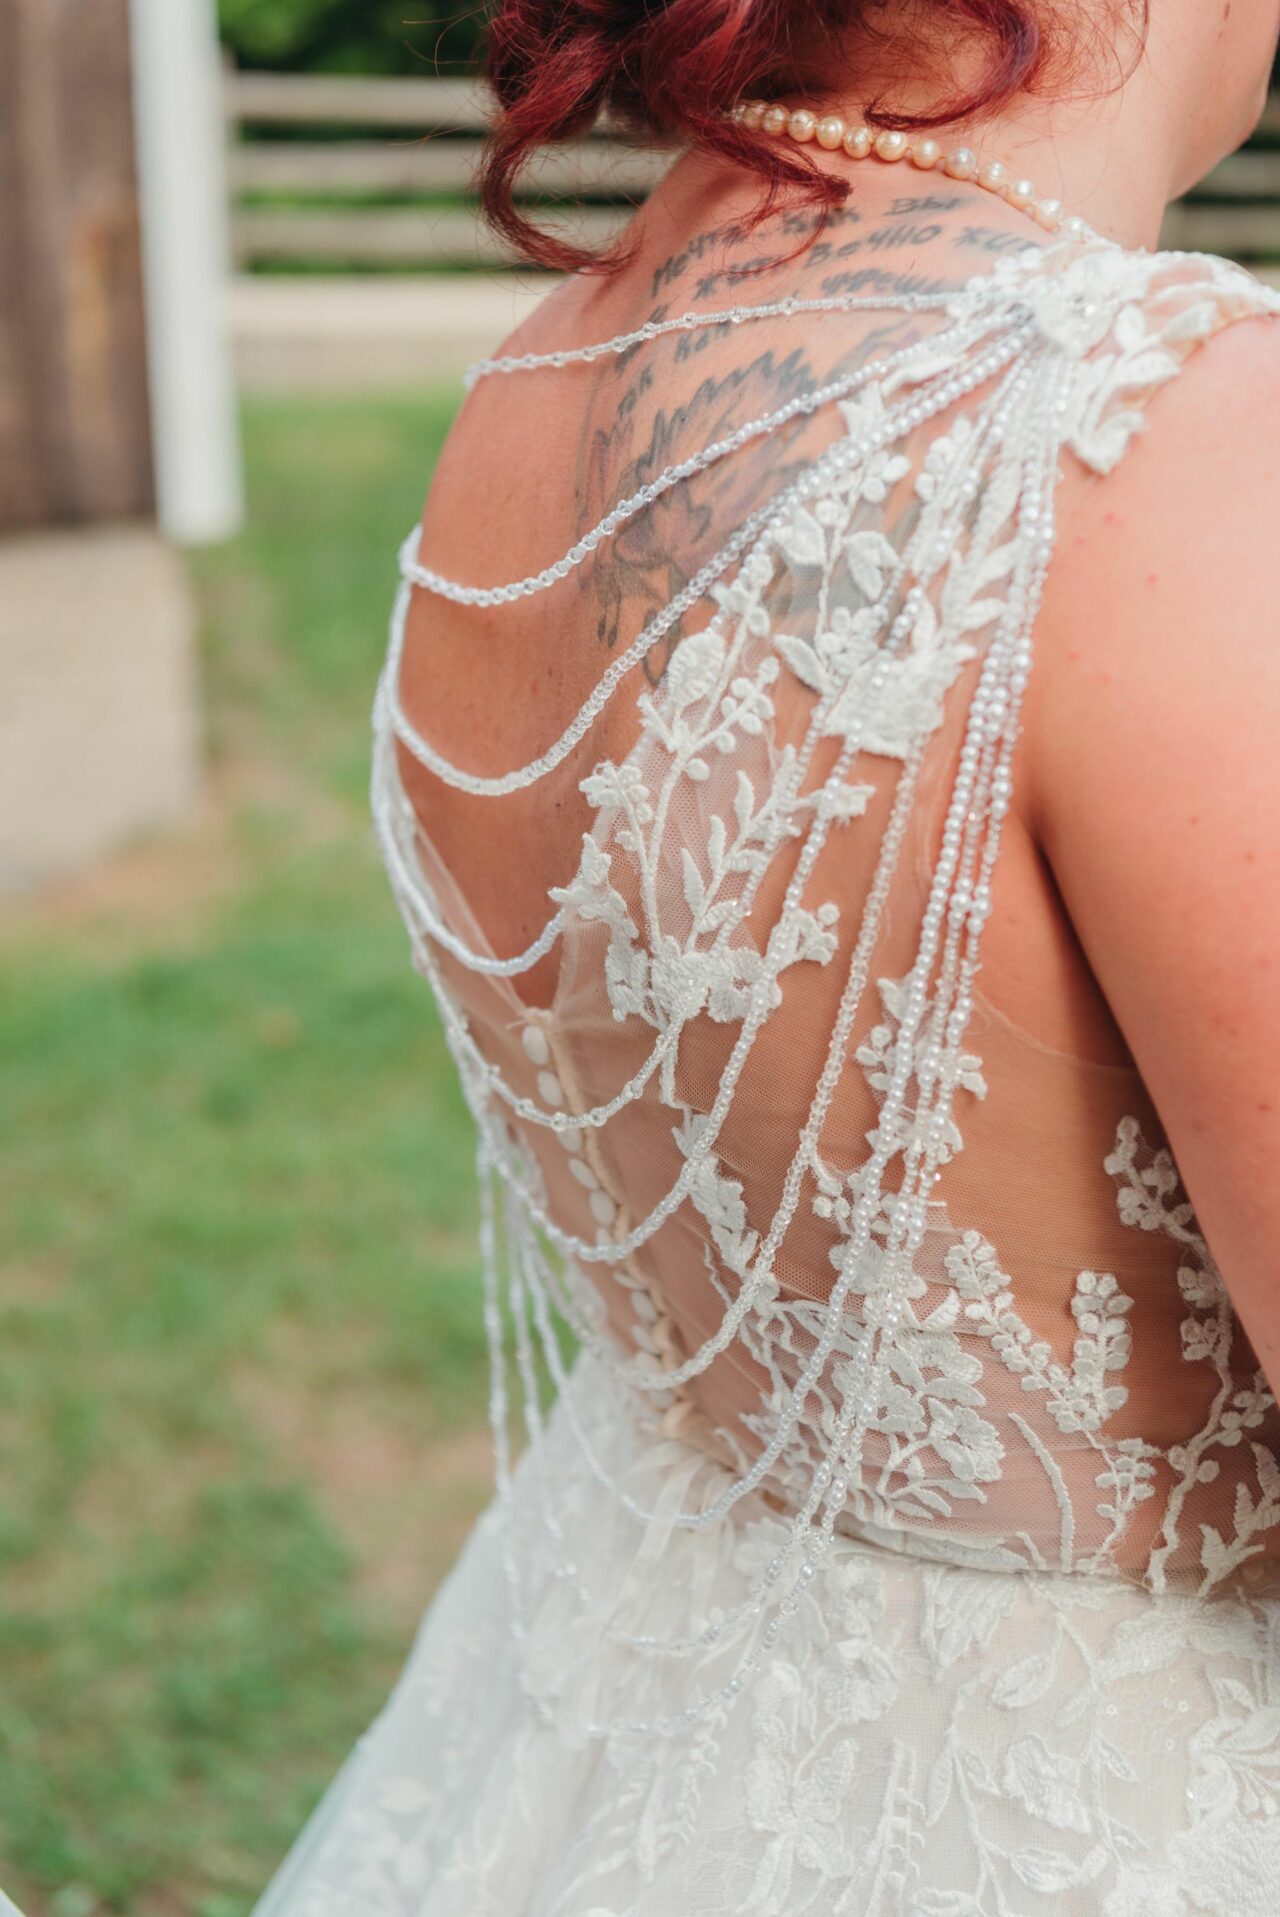 Side Profile of Brides Dress